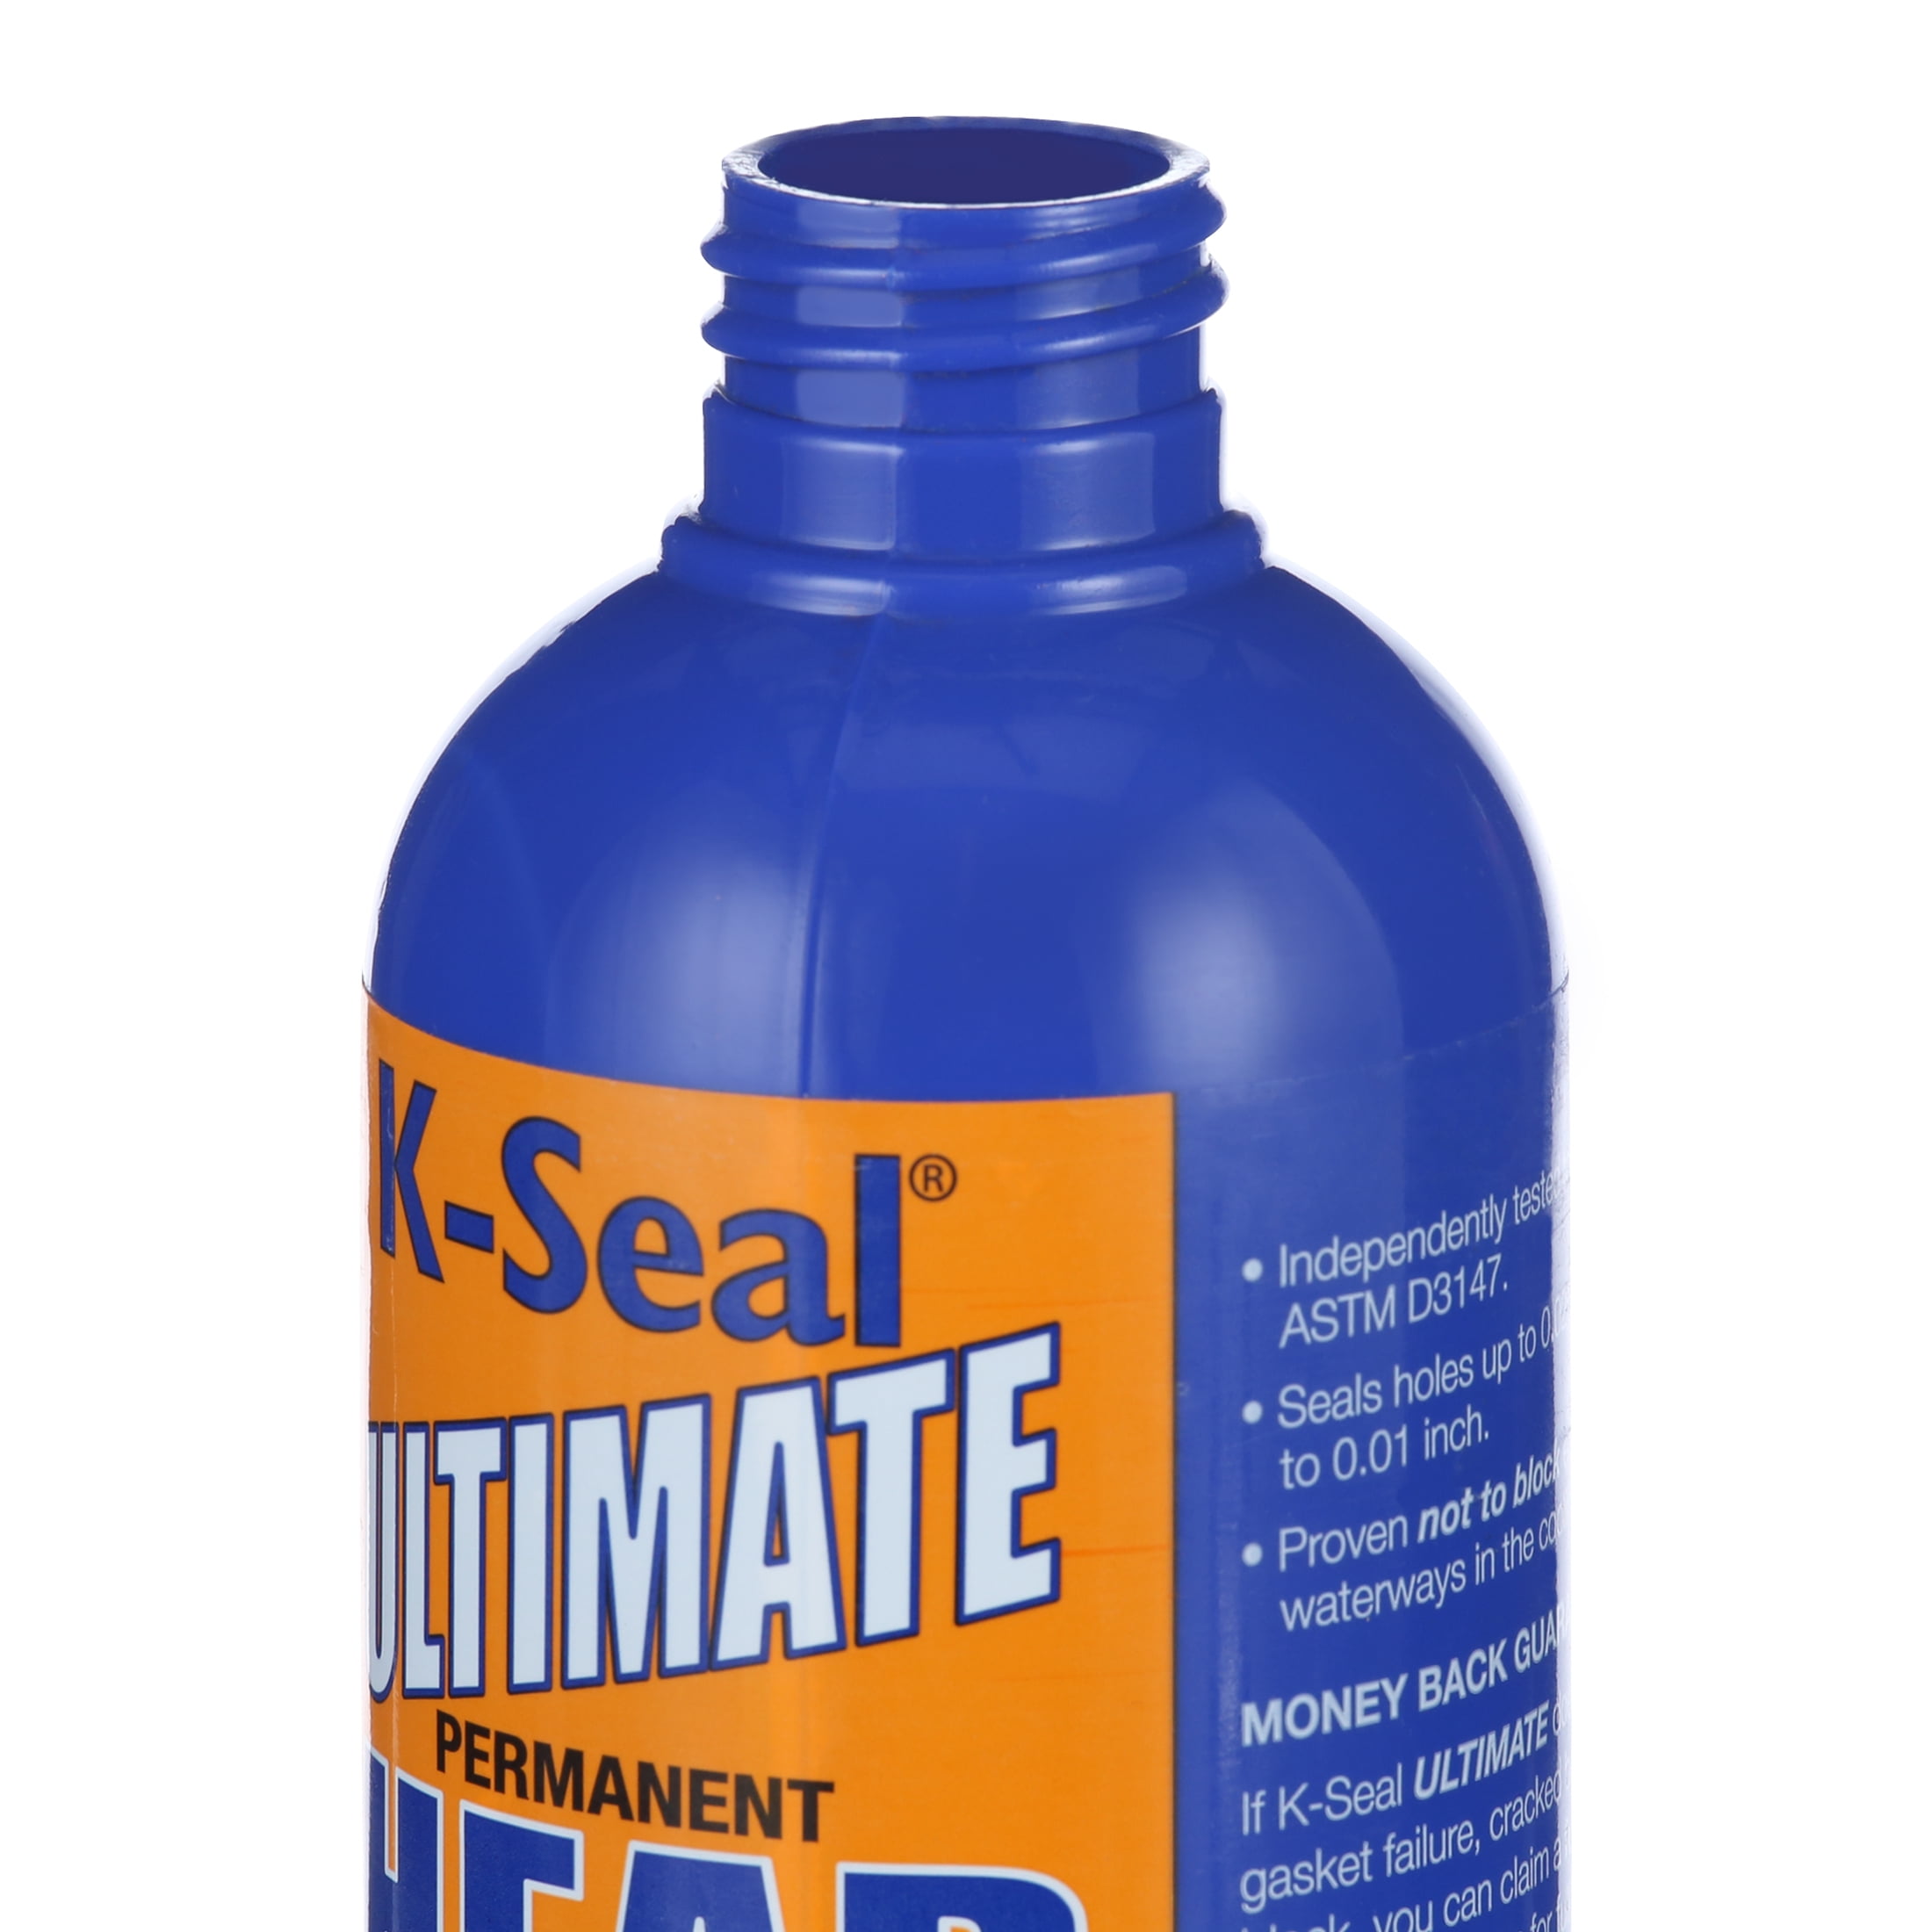 Steel Seal for - Permanent Head Gasket Repair 16oz Bottle for sale online